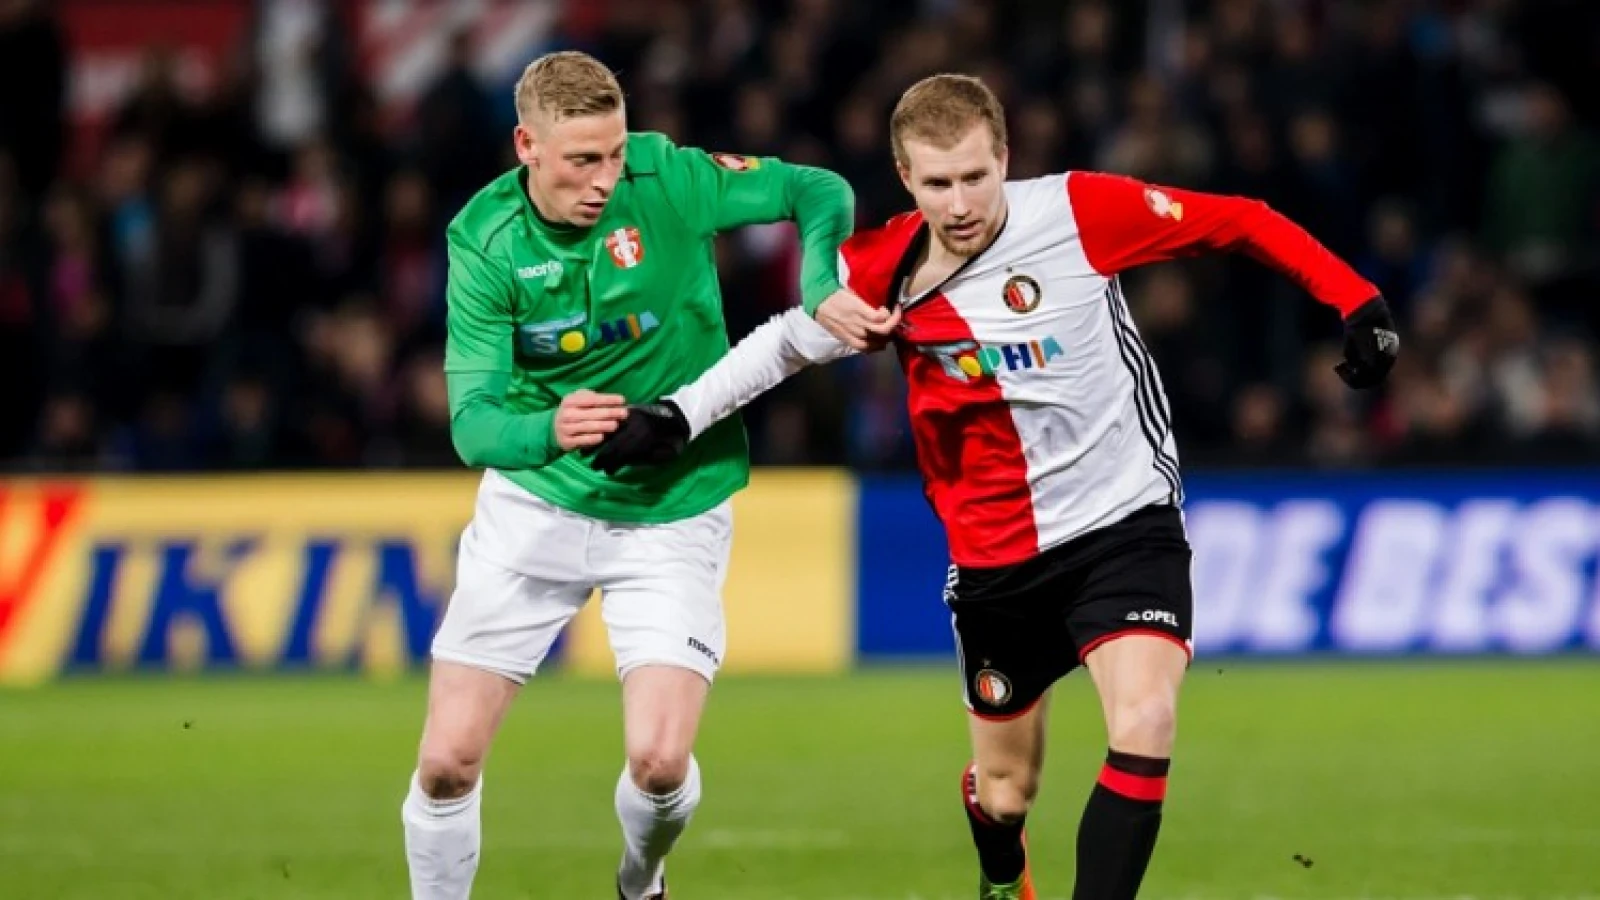 LIVE | Feyenoord - FC Dordrecht 2-0 | Einde wedstrijd